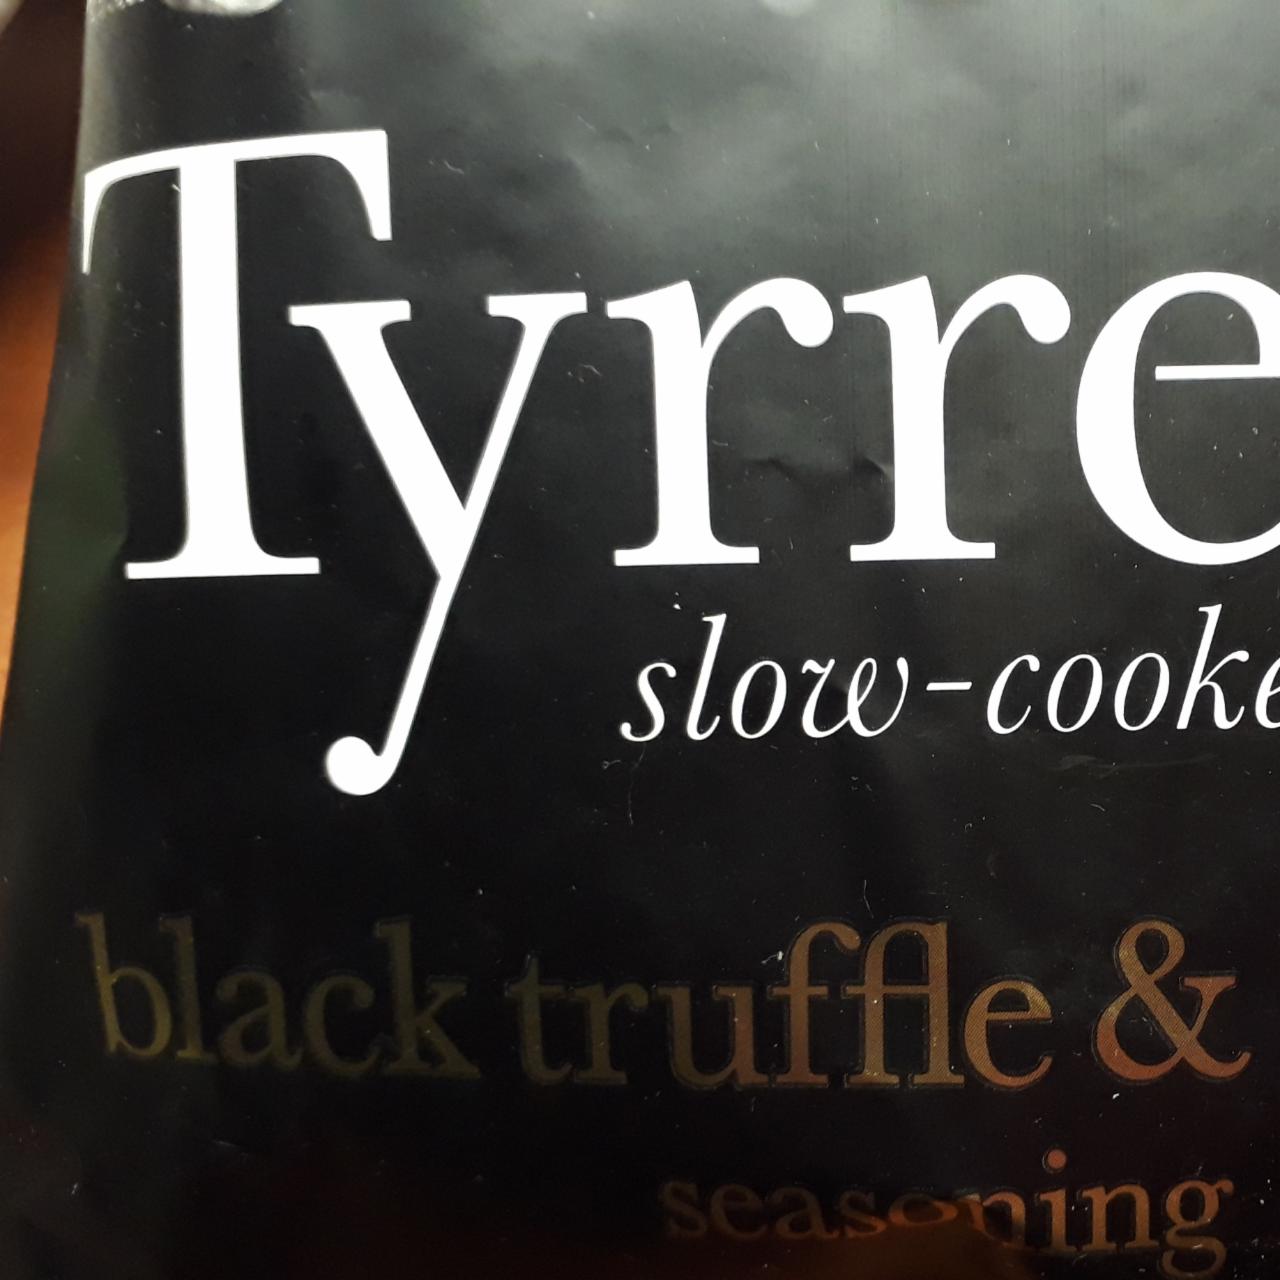 Fotografie - Black Truffle & Sea Salt Tyrrell's